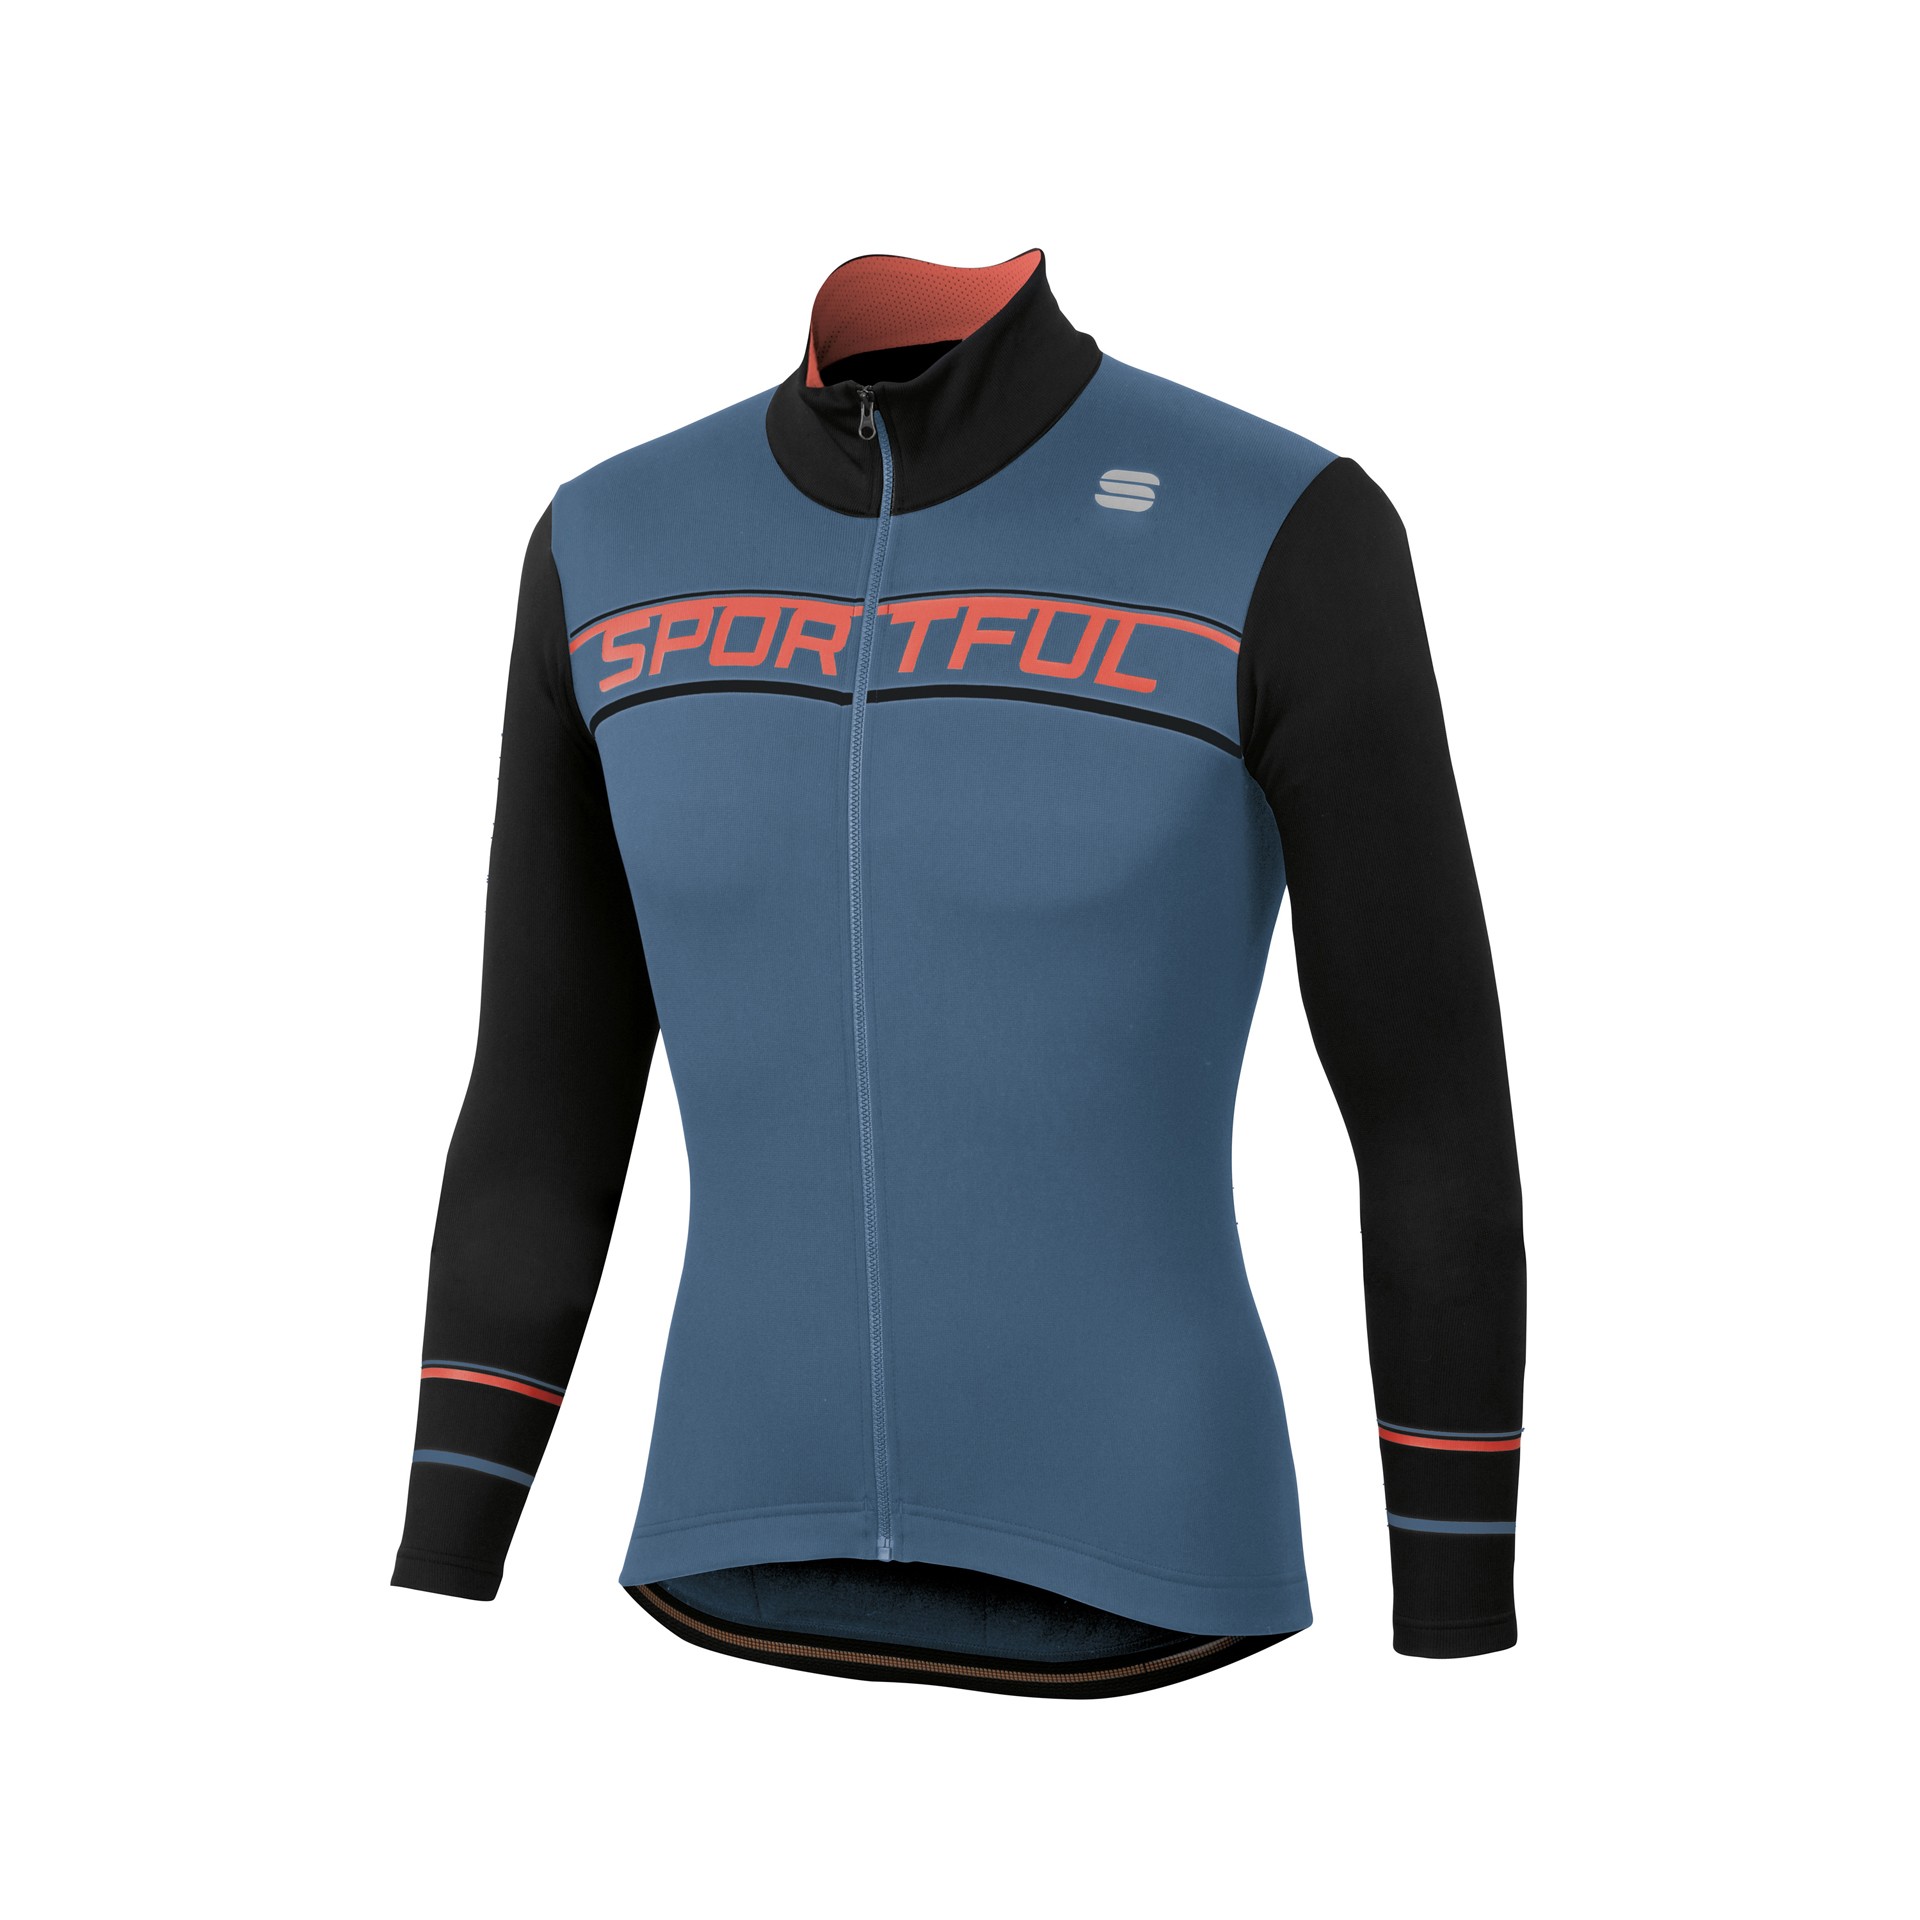 Sportful giro thermal cycling jersey long sleeves blue stellar black